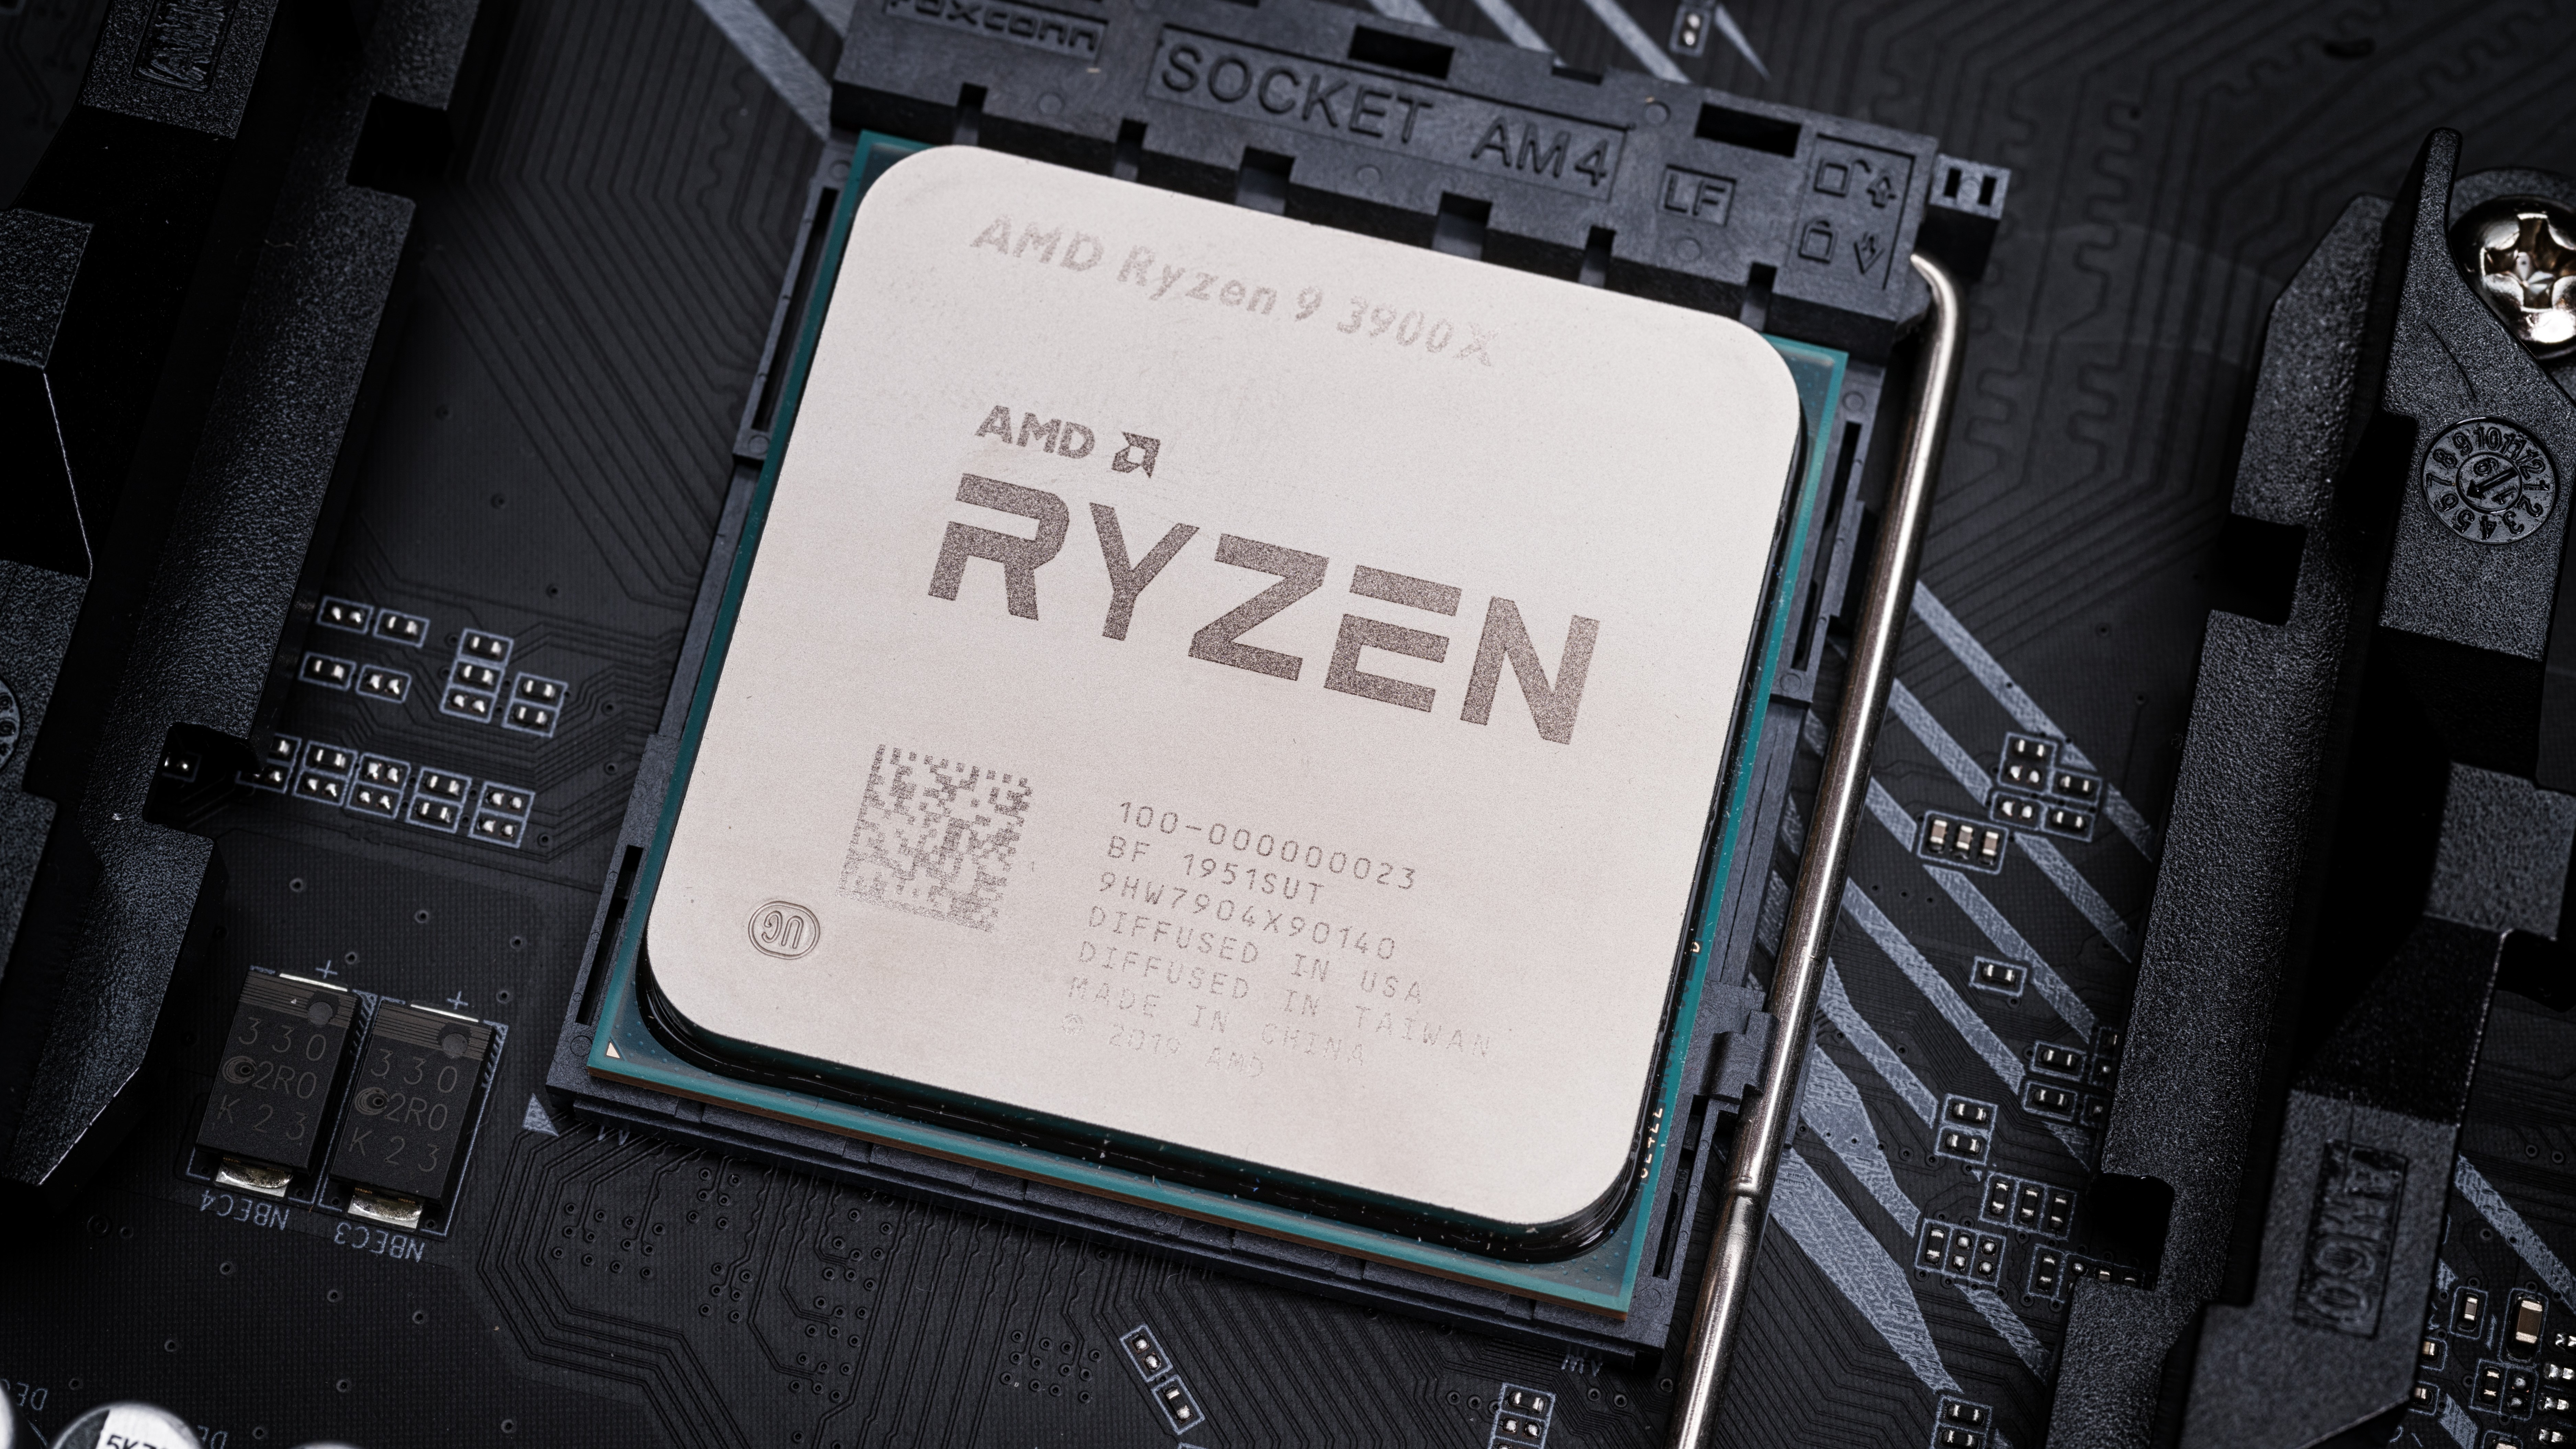 Процессор amd ryzen сокет. Процессор AMD Ryzen 9 3900x. AMD am4 Socket. Сокет Ryzen am4. Сокеты AMD 2020.